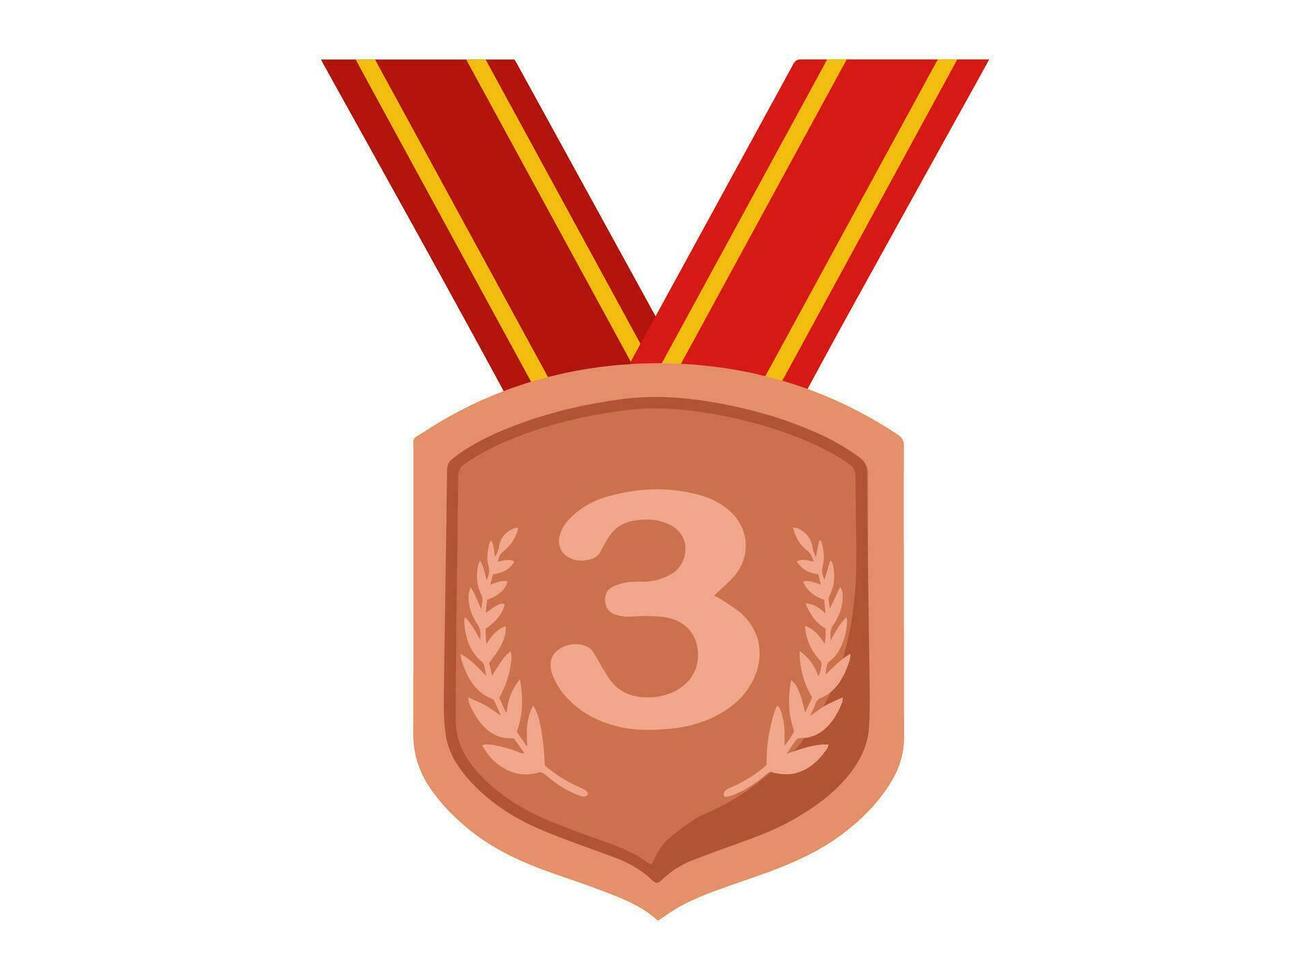 3rd Place Bronze Medal Illustration vector